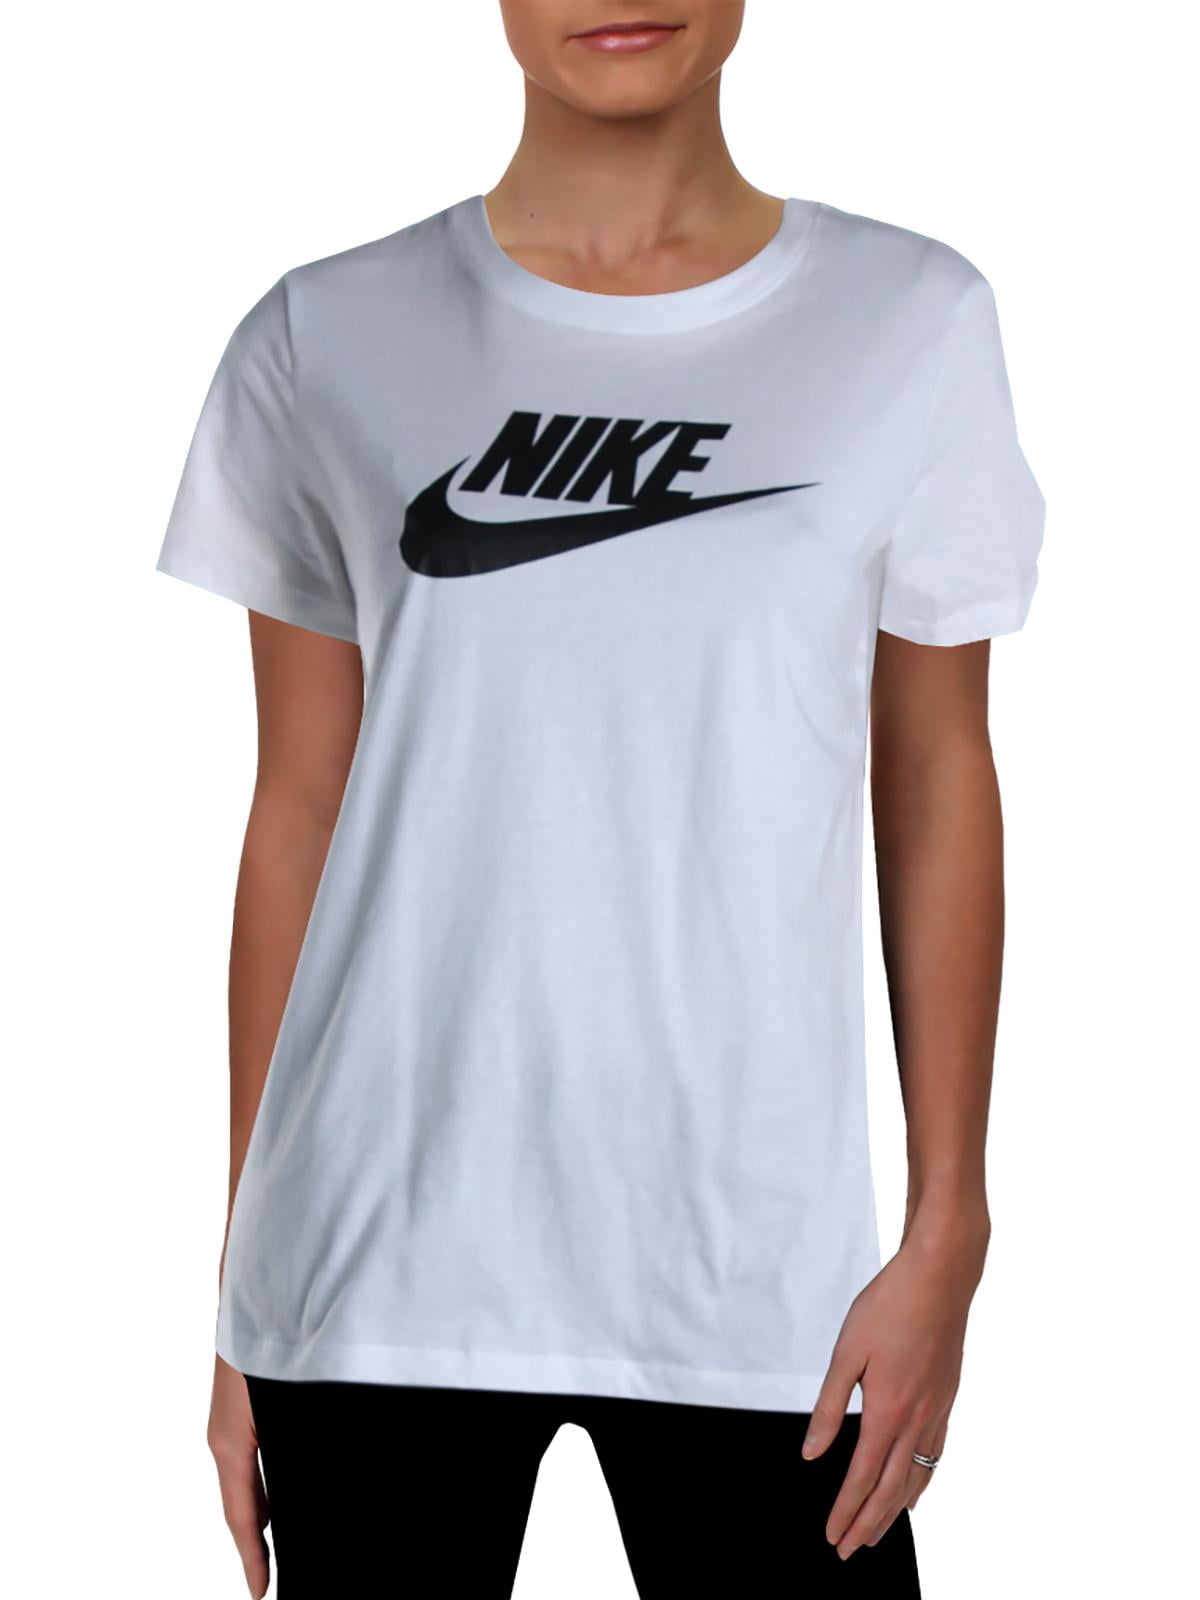 Nike Womens Logo Fitness T-Shirt White M - Walmart.com